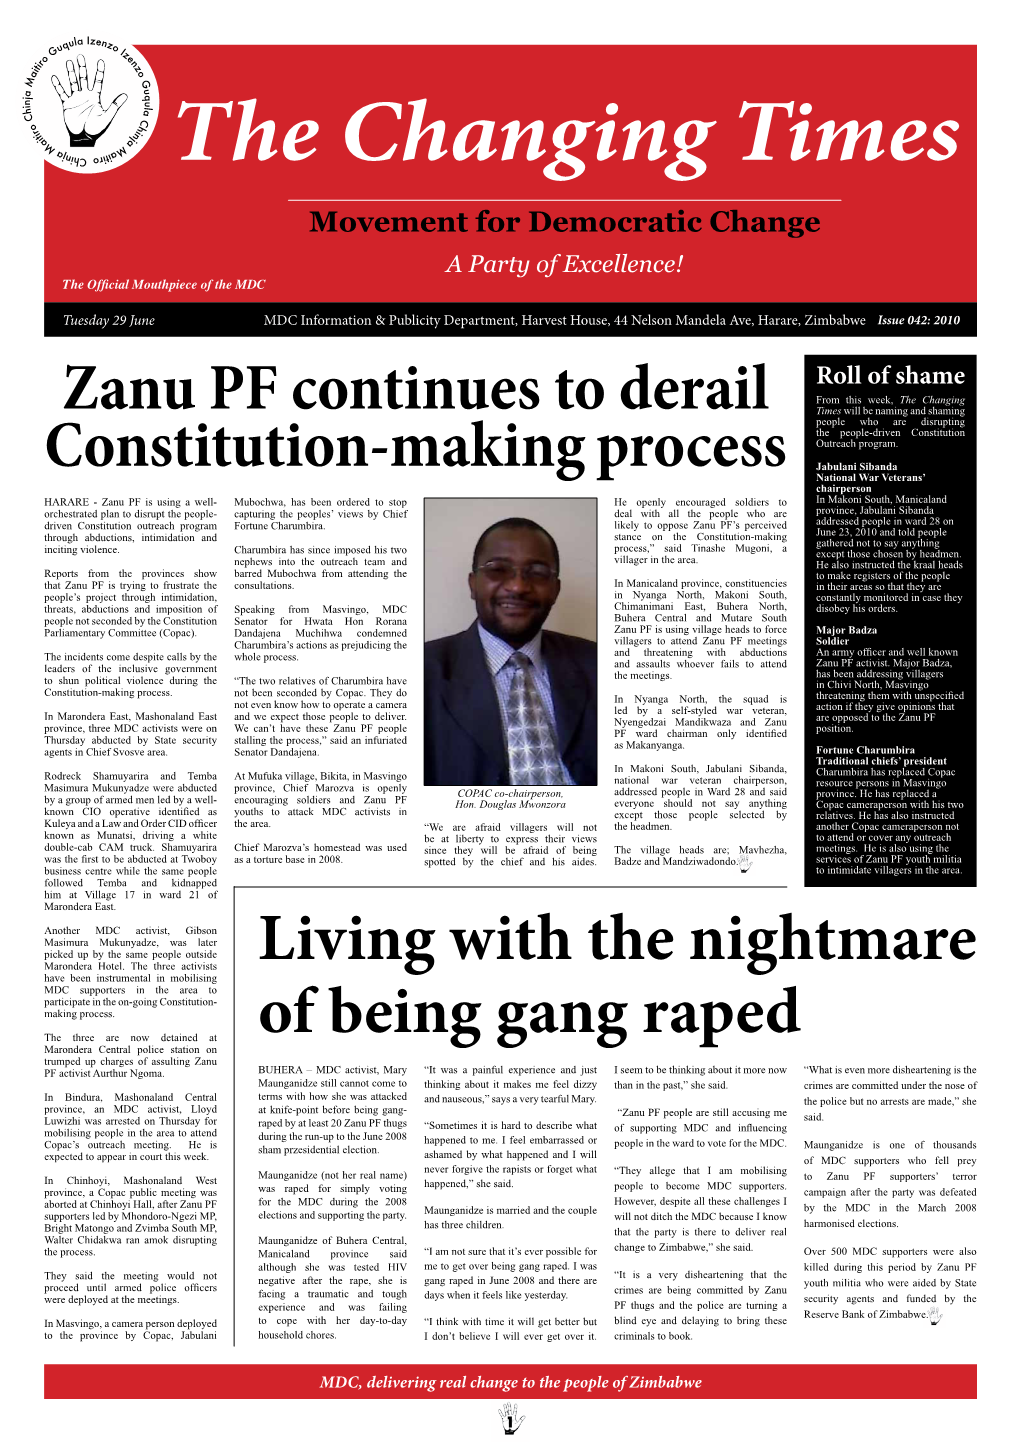 Zanu PF Continues to Derail Constitution-Making Process Living